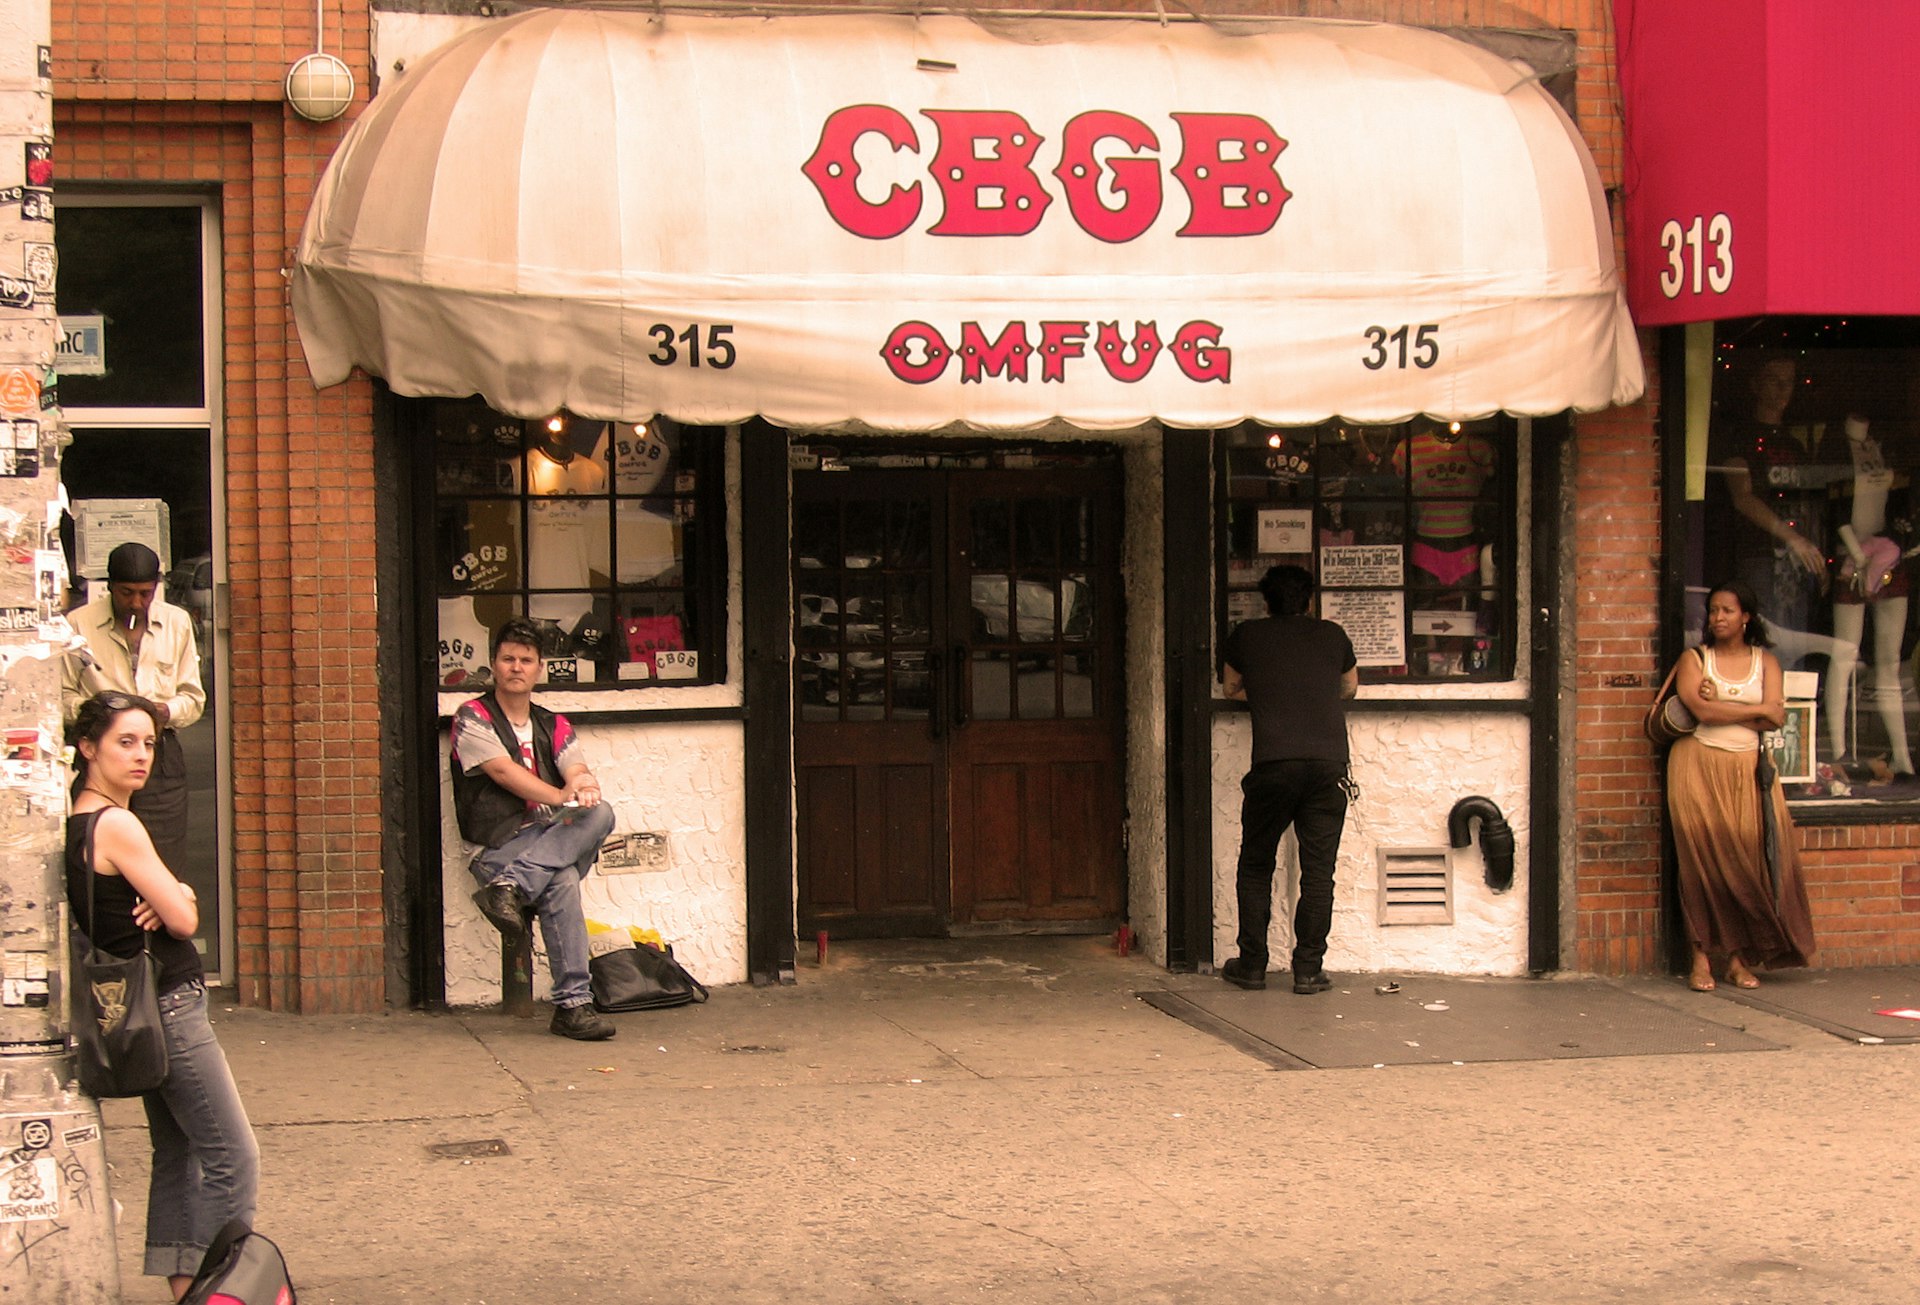 Legendary New York club CBGB to be reborn as an airport restaurant